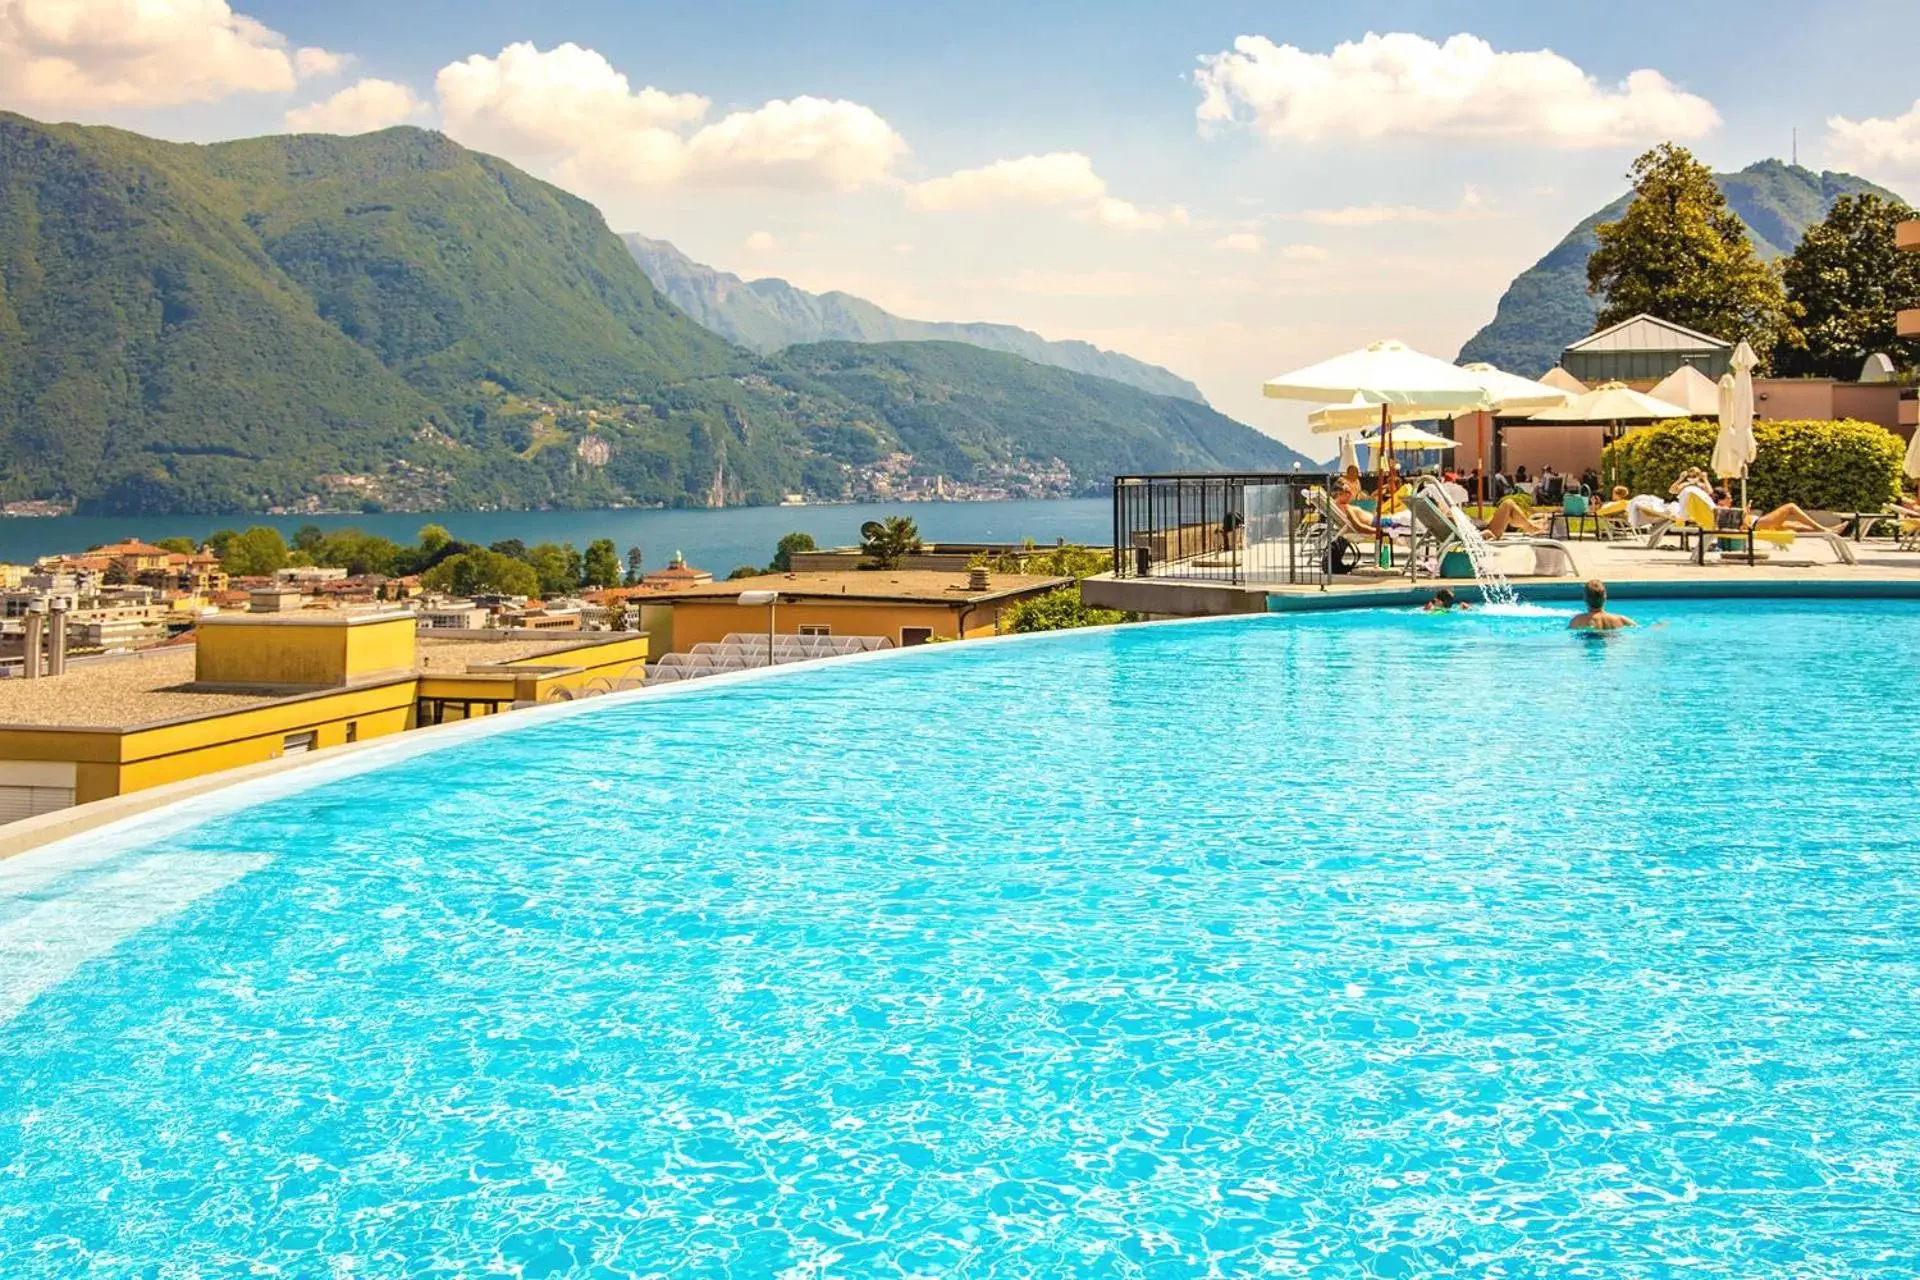 Swimming pool in Villa Sassa Hotel, Residence & Spa - Ticino Hotels Group